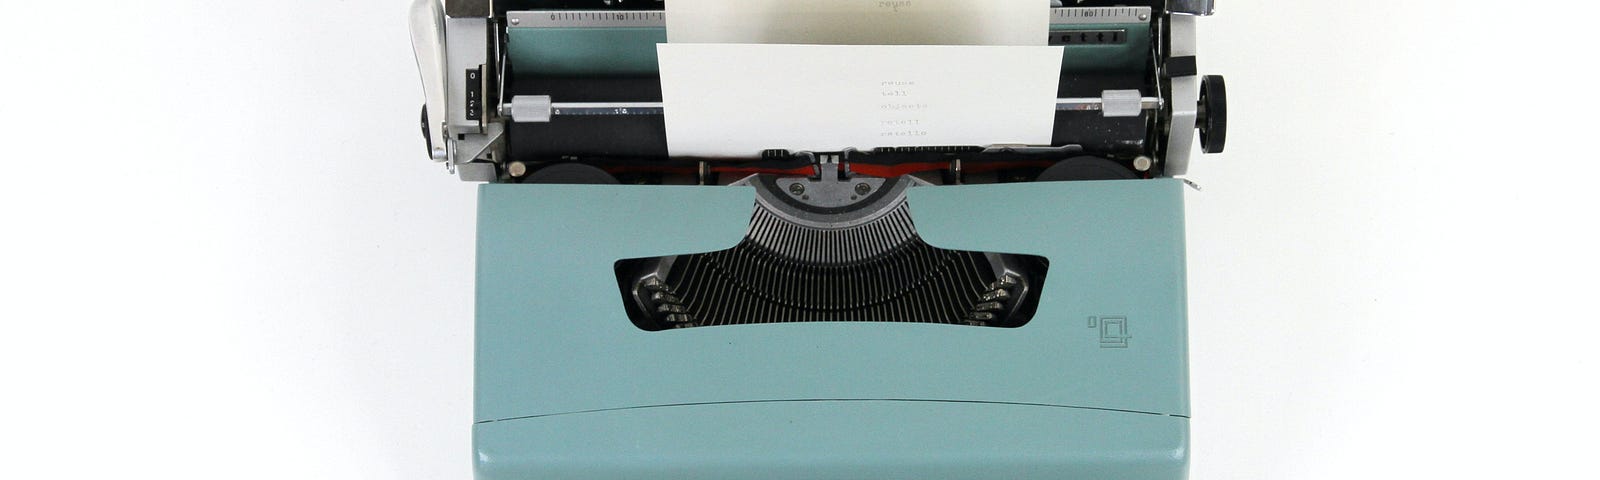 old school blue typewriter